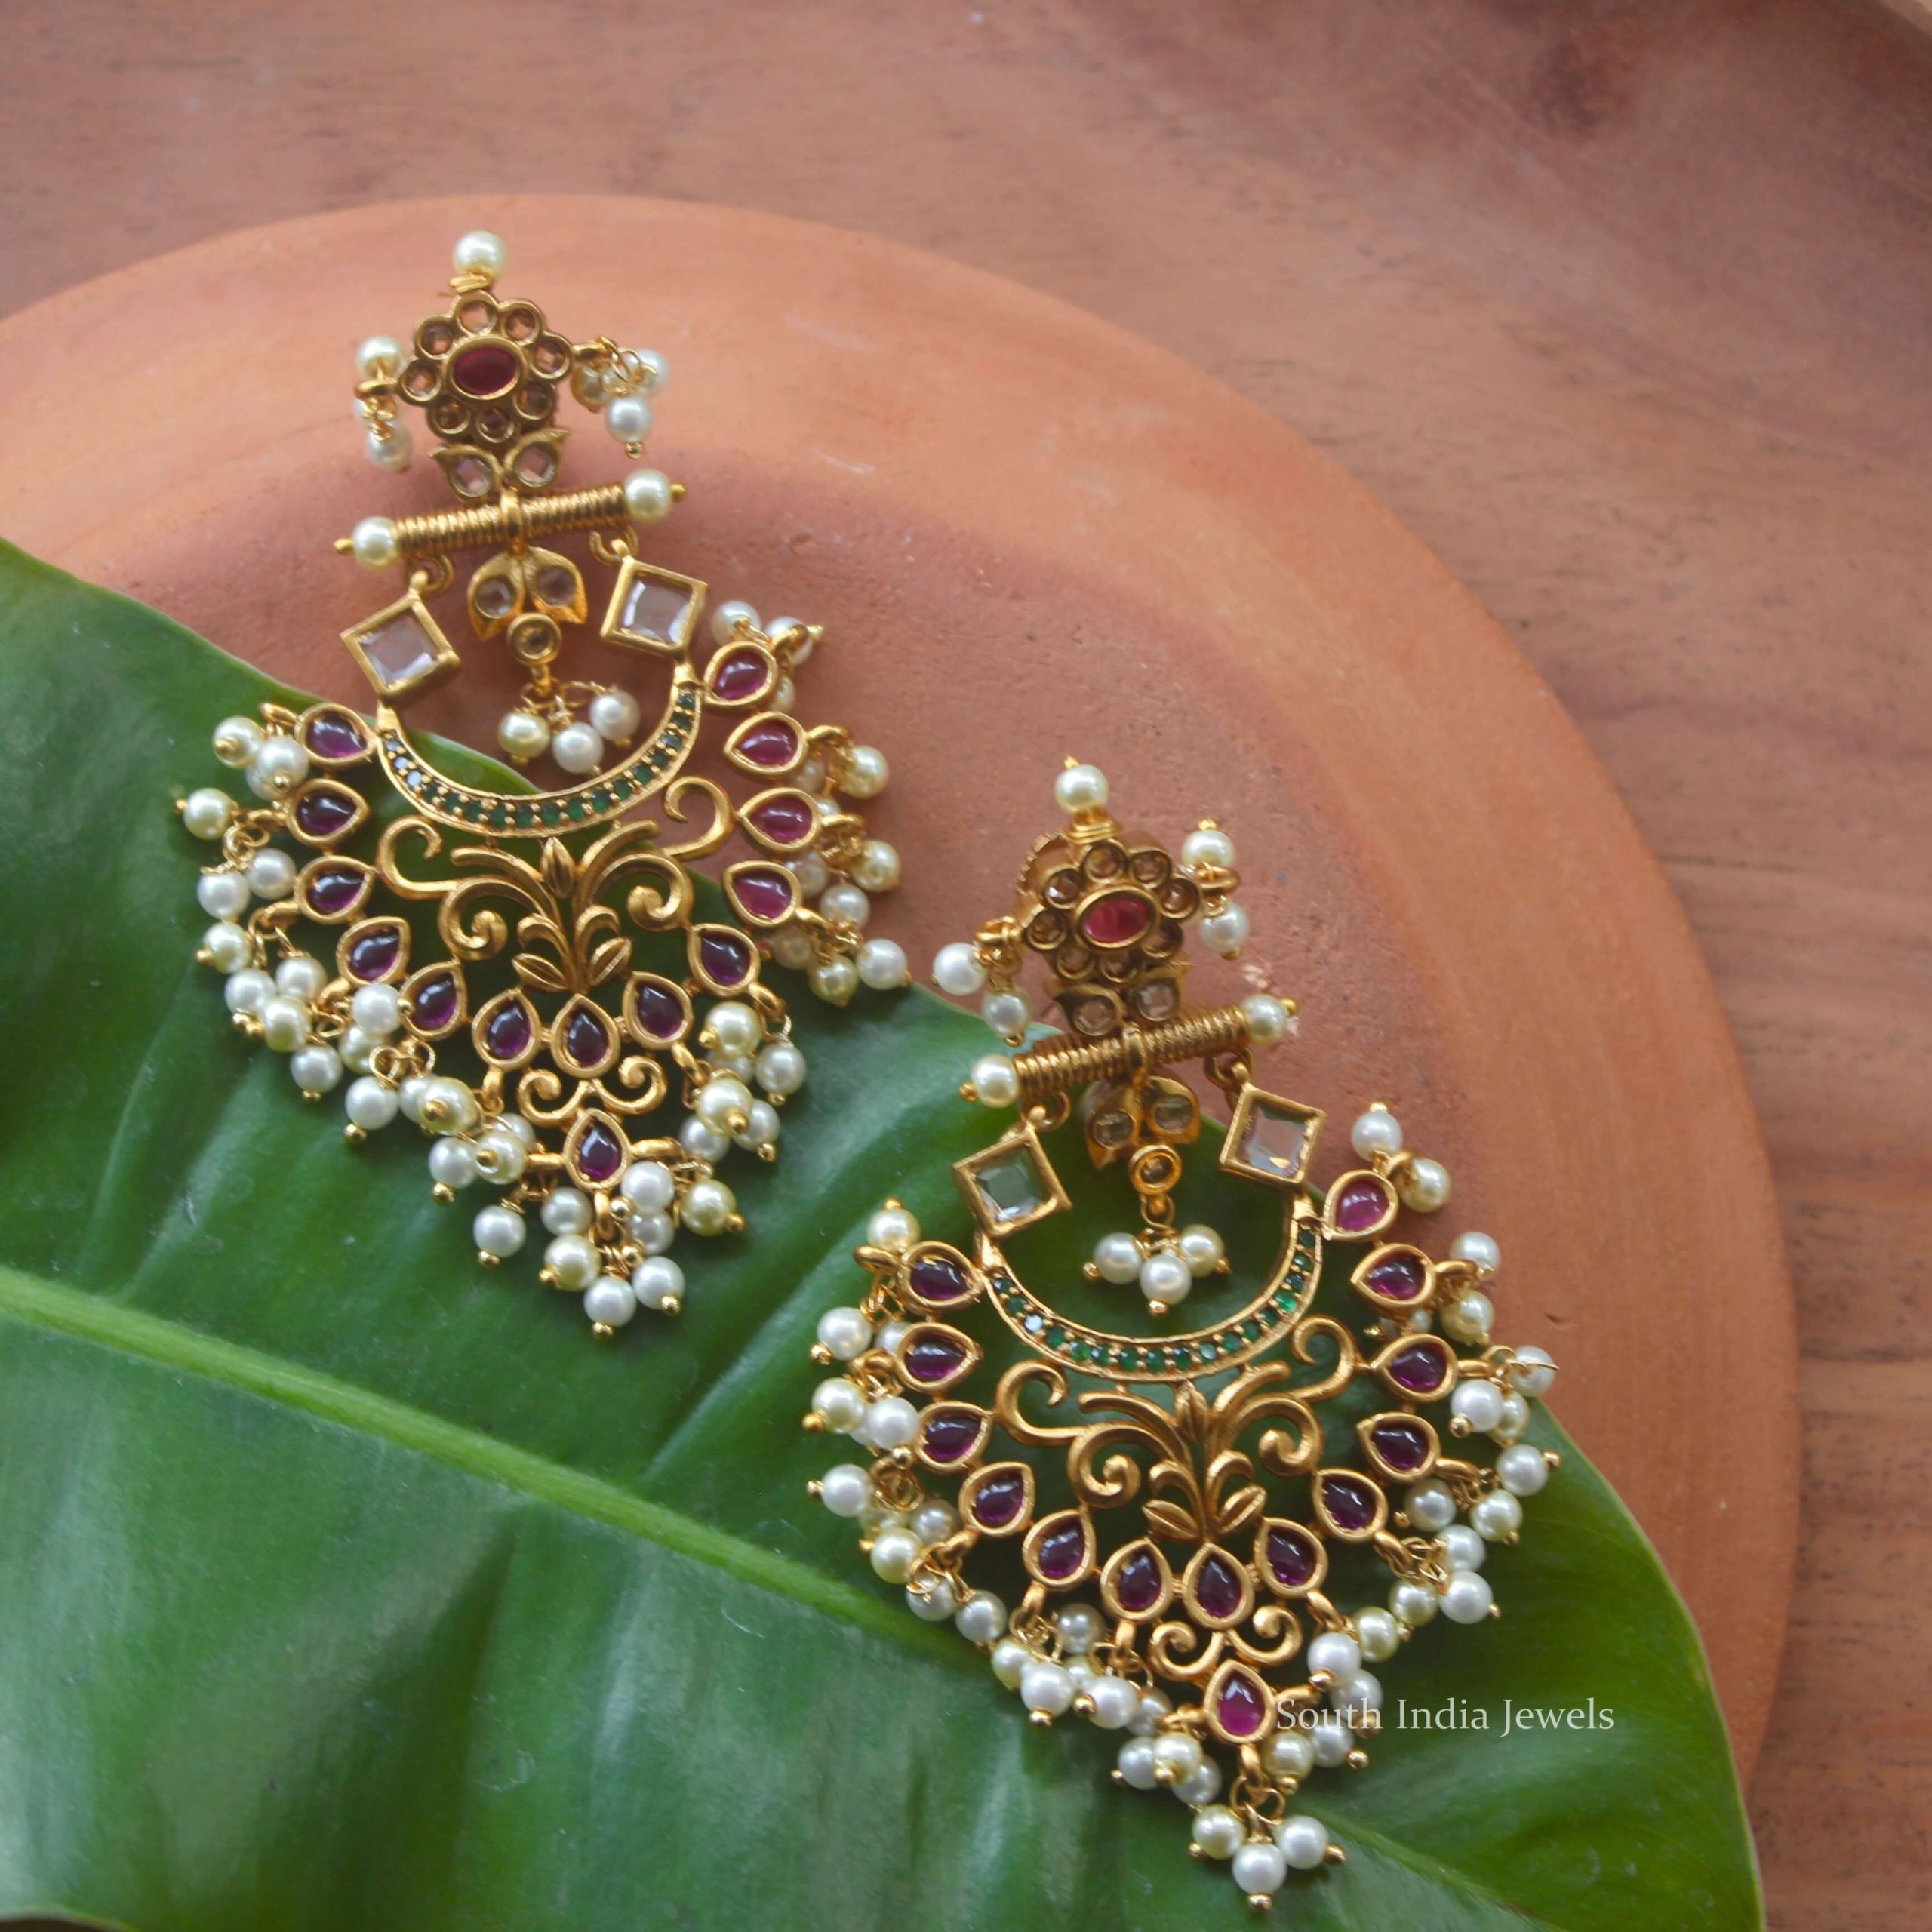 Beautiful Floral Chandbali Earrings - South India Jewels